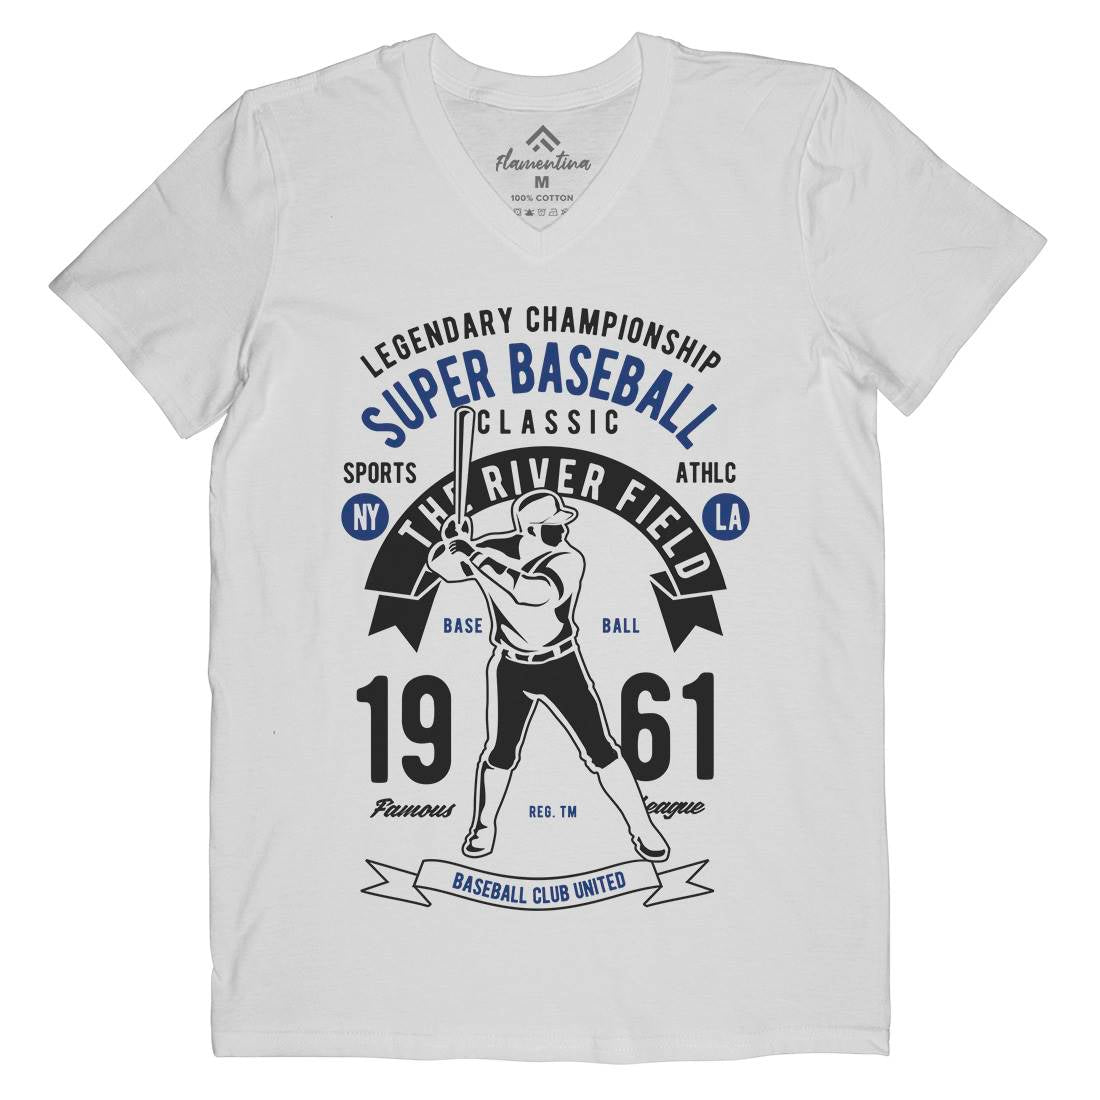 Super Baseball Mens V-Neck T-Shirt Sport B455